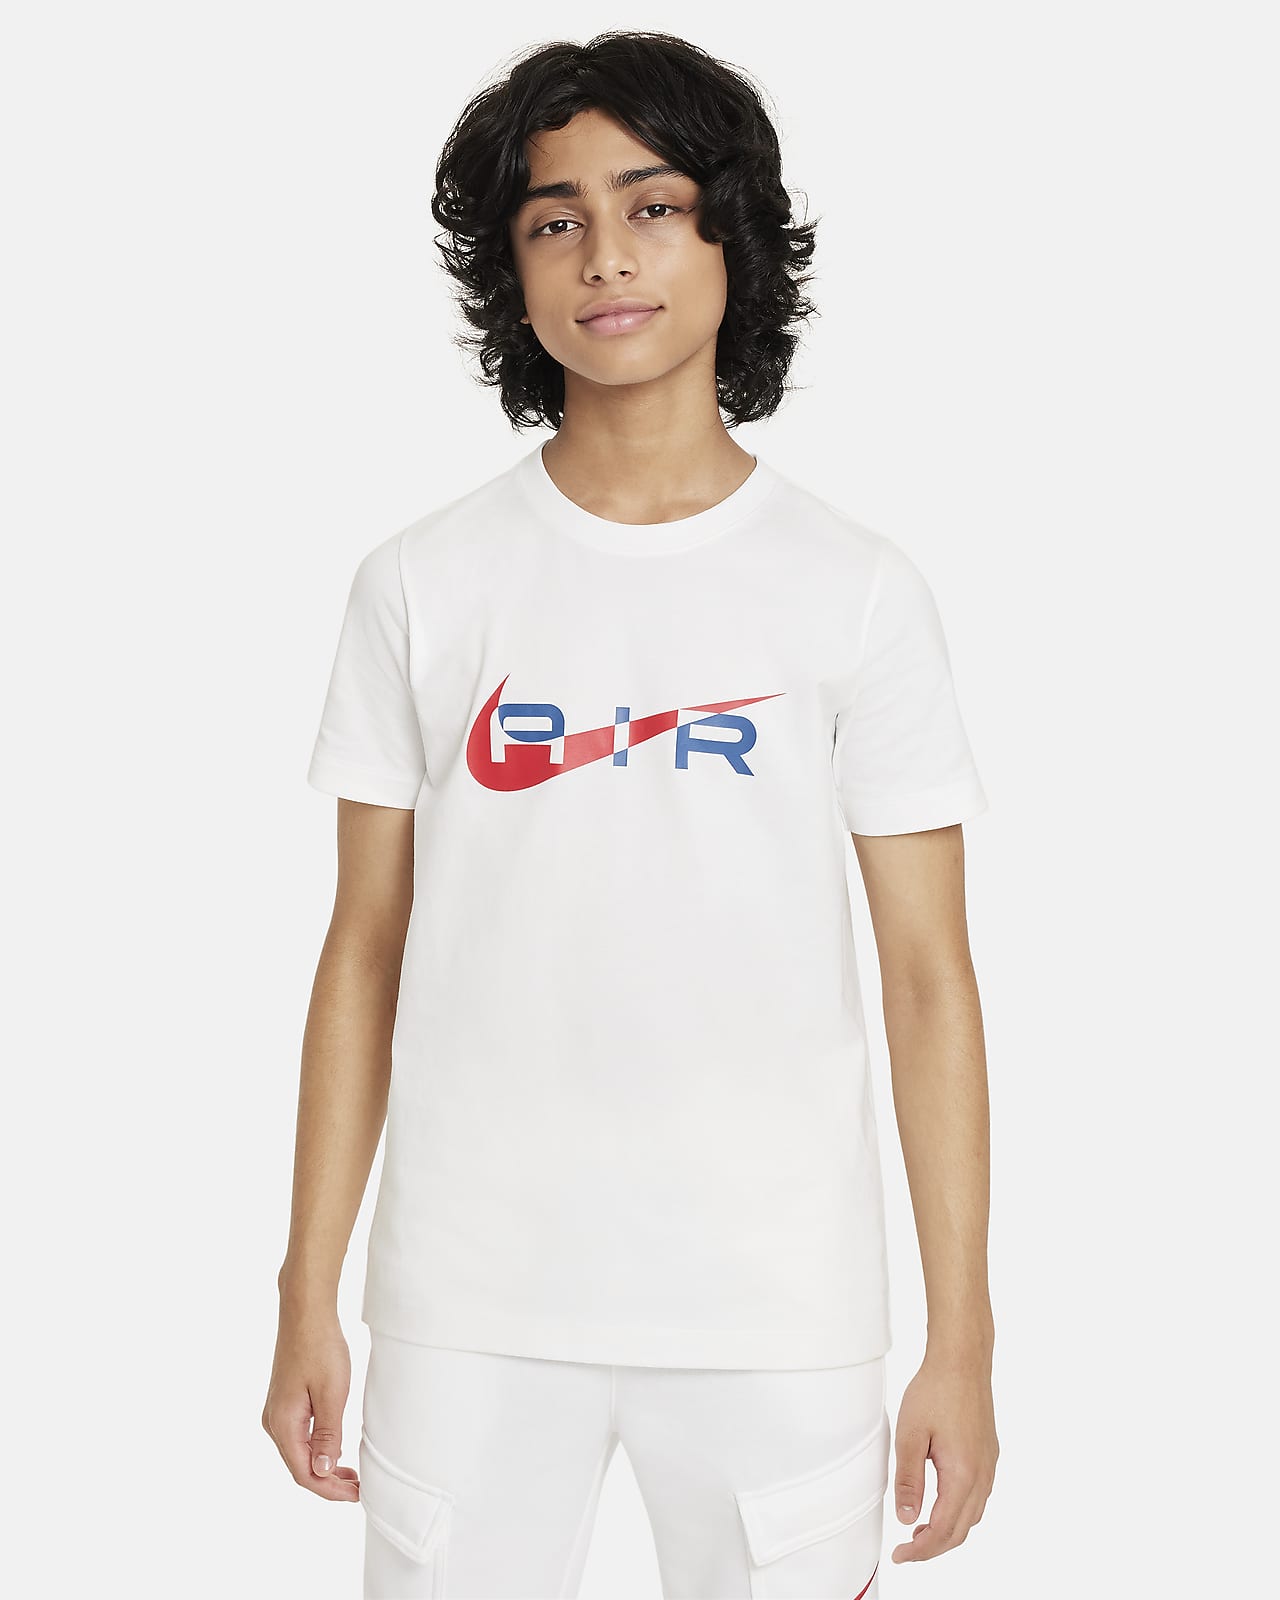 Nike Air Genç Çocuk (Erkek) Tişörtü